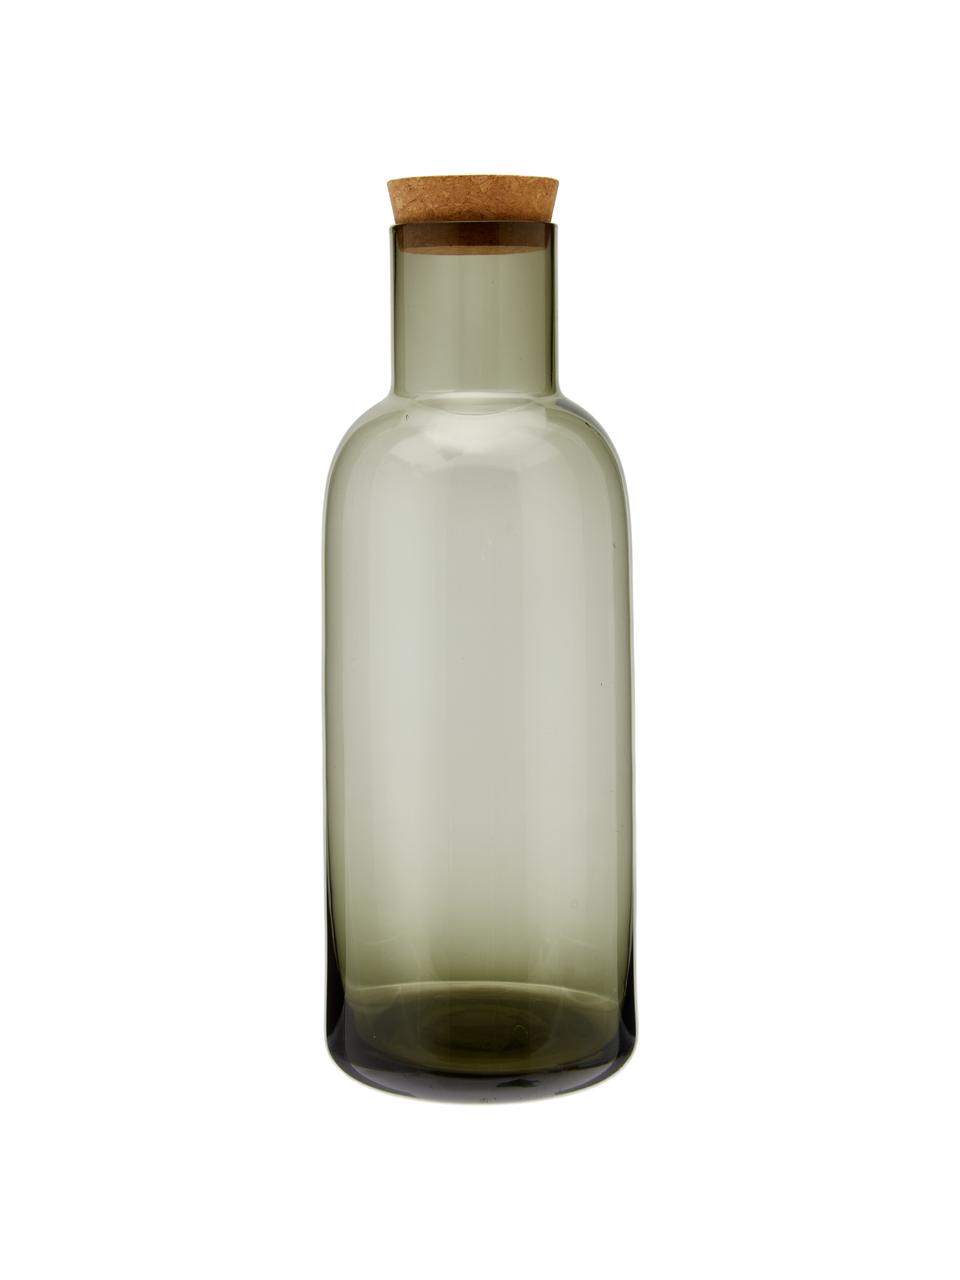 Glaskaraffe Clearance in Grau mit Korkdeckel, 1 L, Deckel: Kork, Grau, transparent, H 25 cm